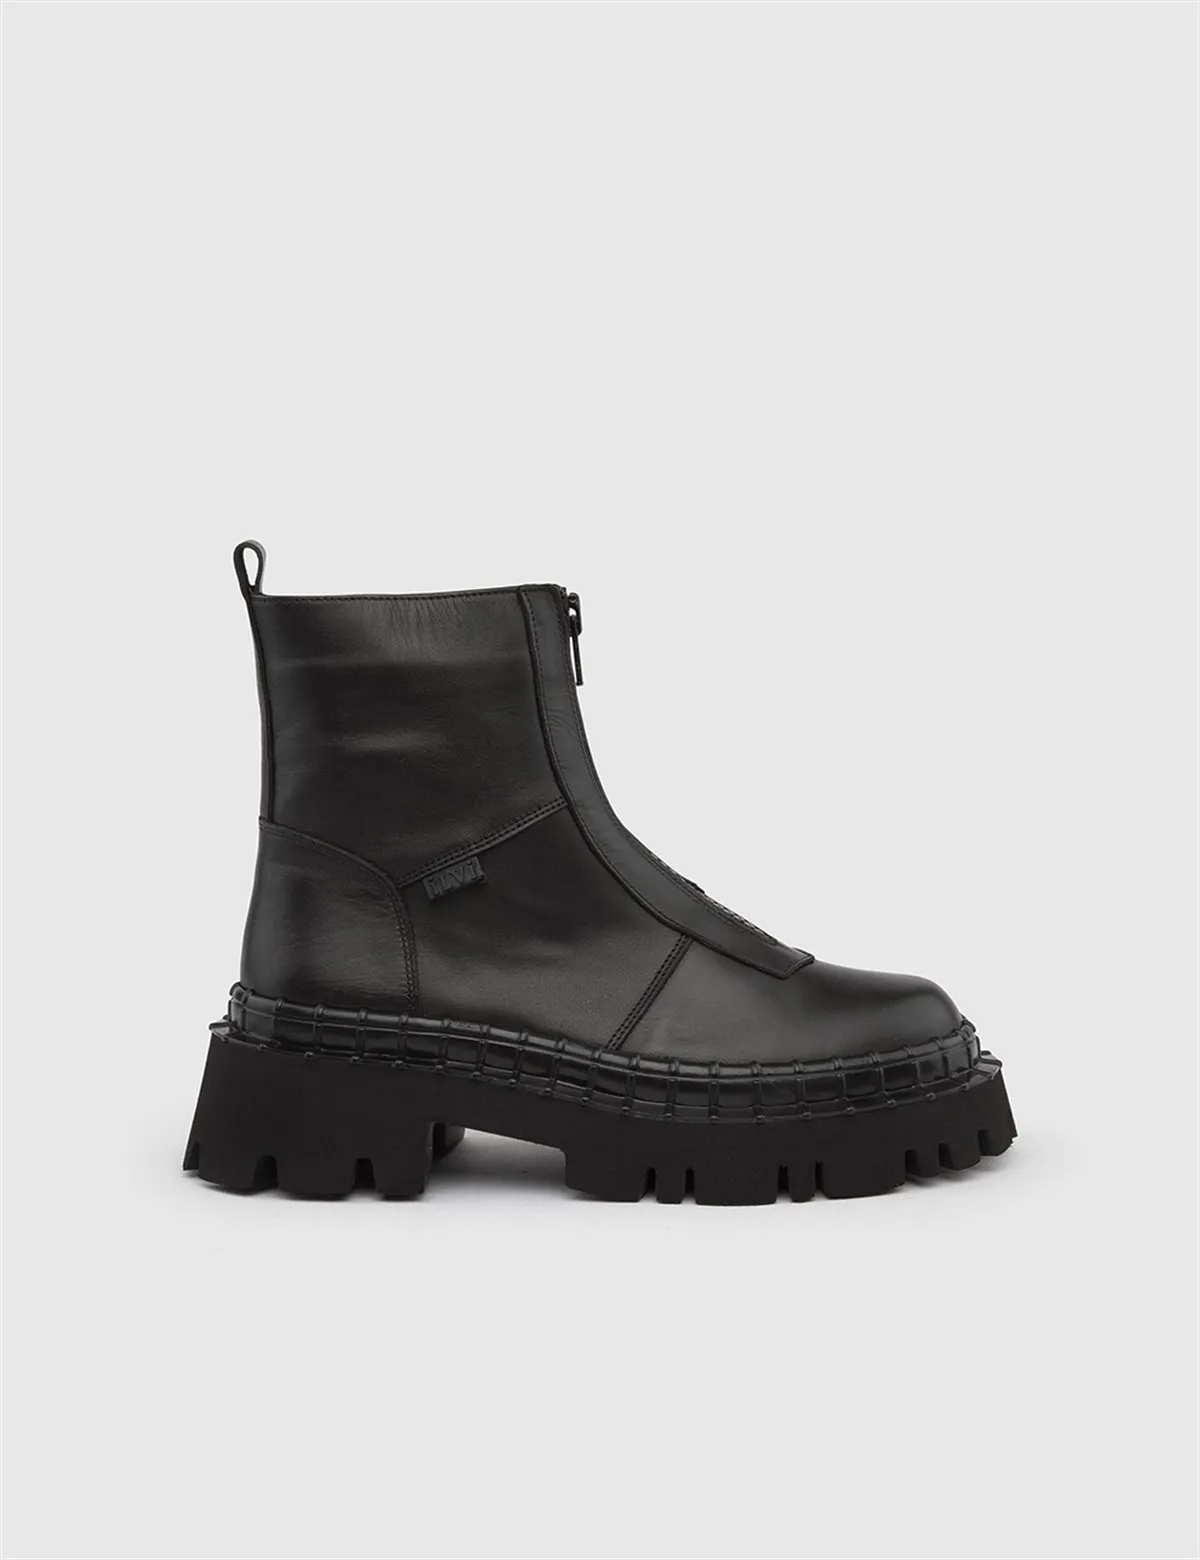 

ILVi-Genuine Leather Handmade Gaston Black Boot Women's Shoes 2022 Fall/Winter